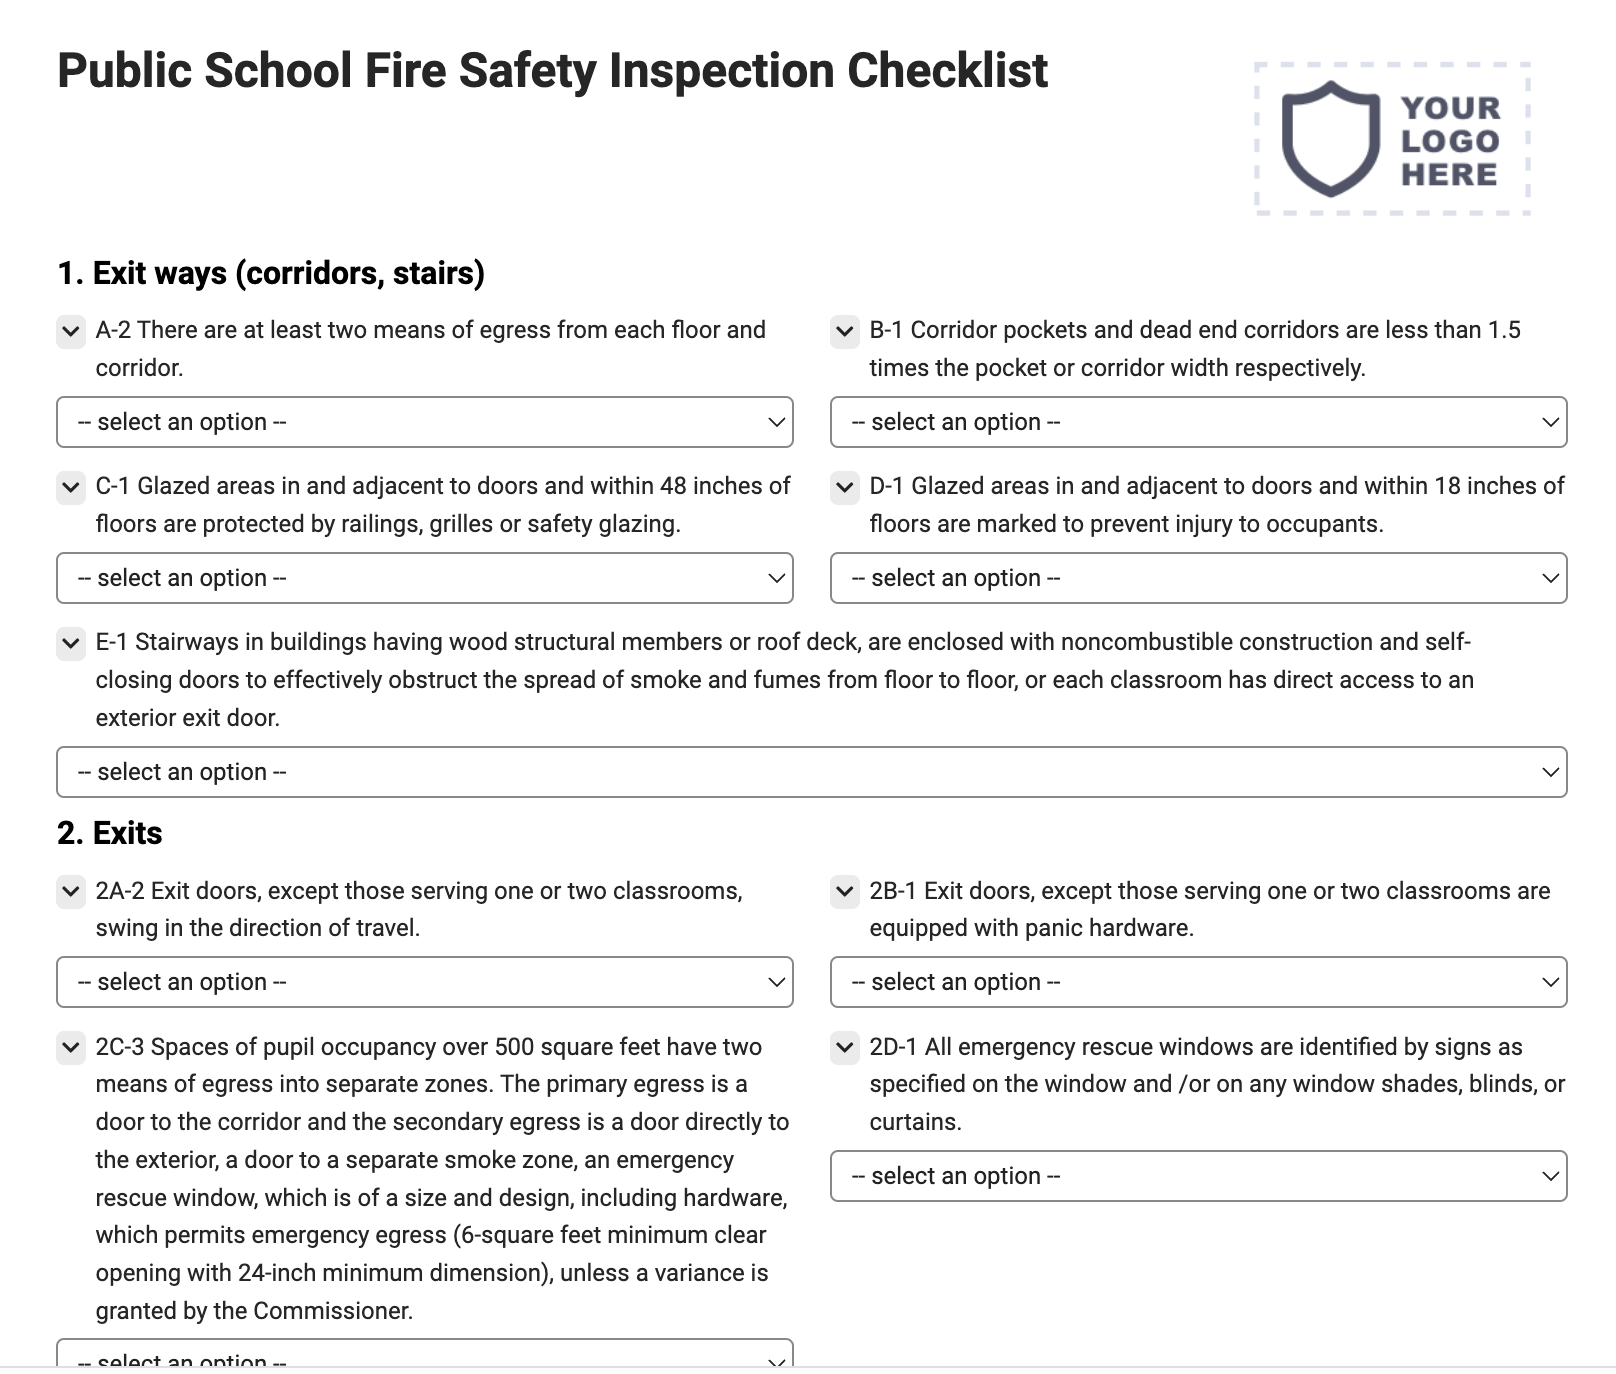 Public School Fire Safety Inspection Checklist